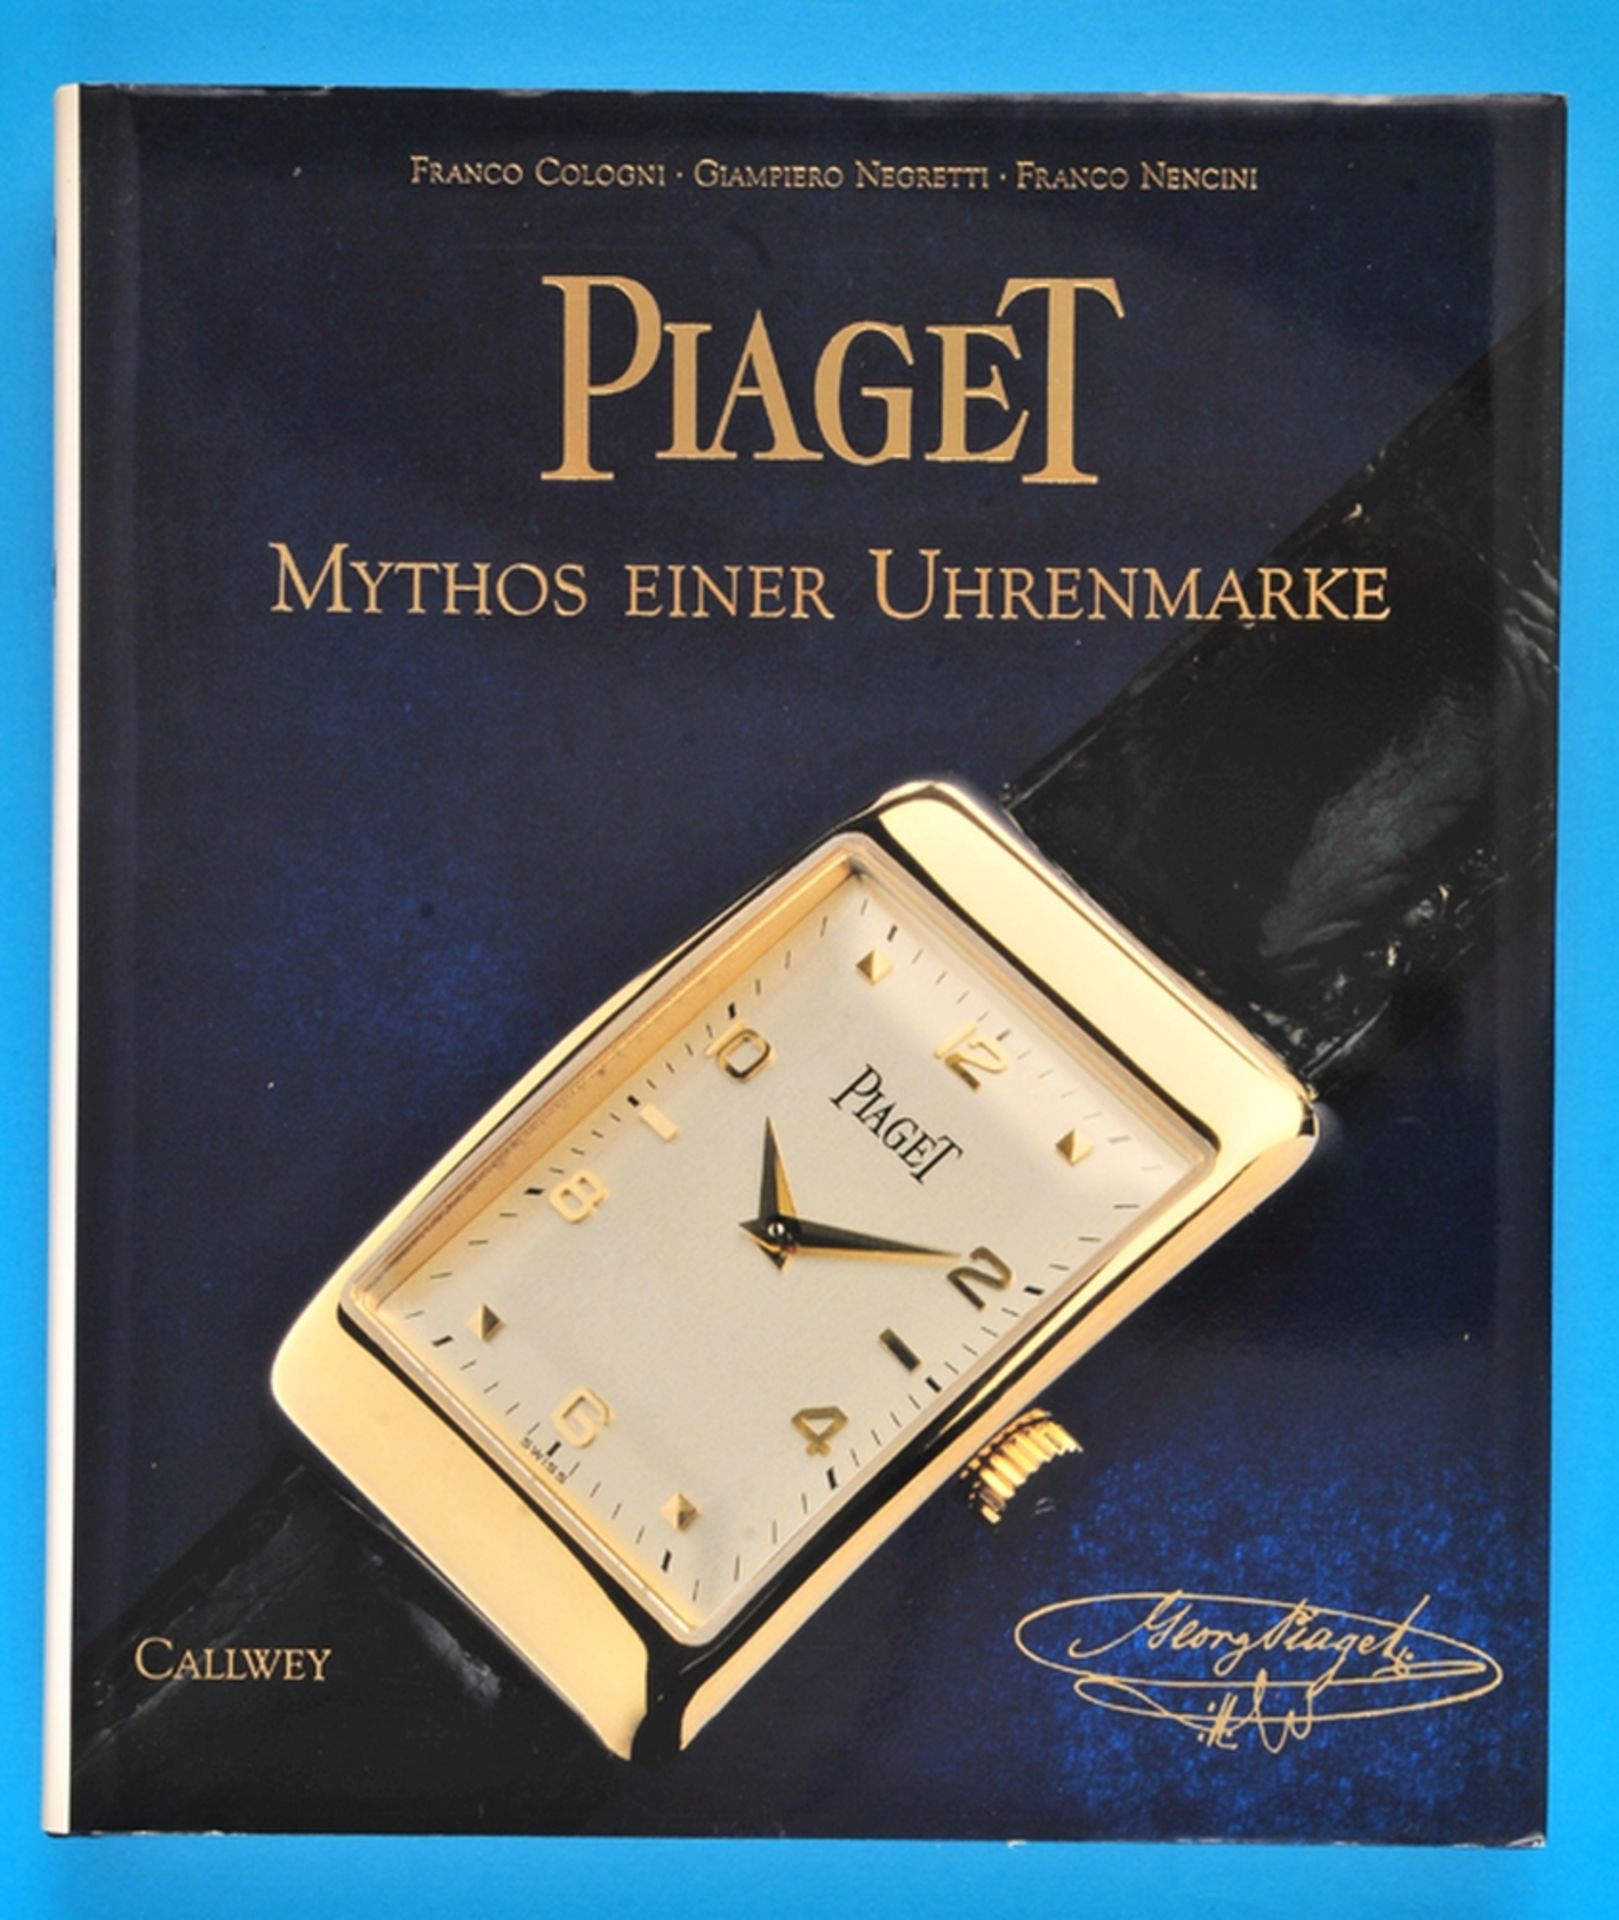 Cologni, Negretti, Nencini, Piaget, Mythos einer Uhrenmarke seit 1874